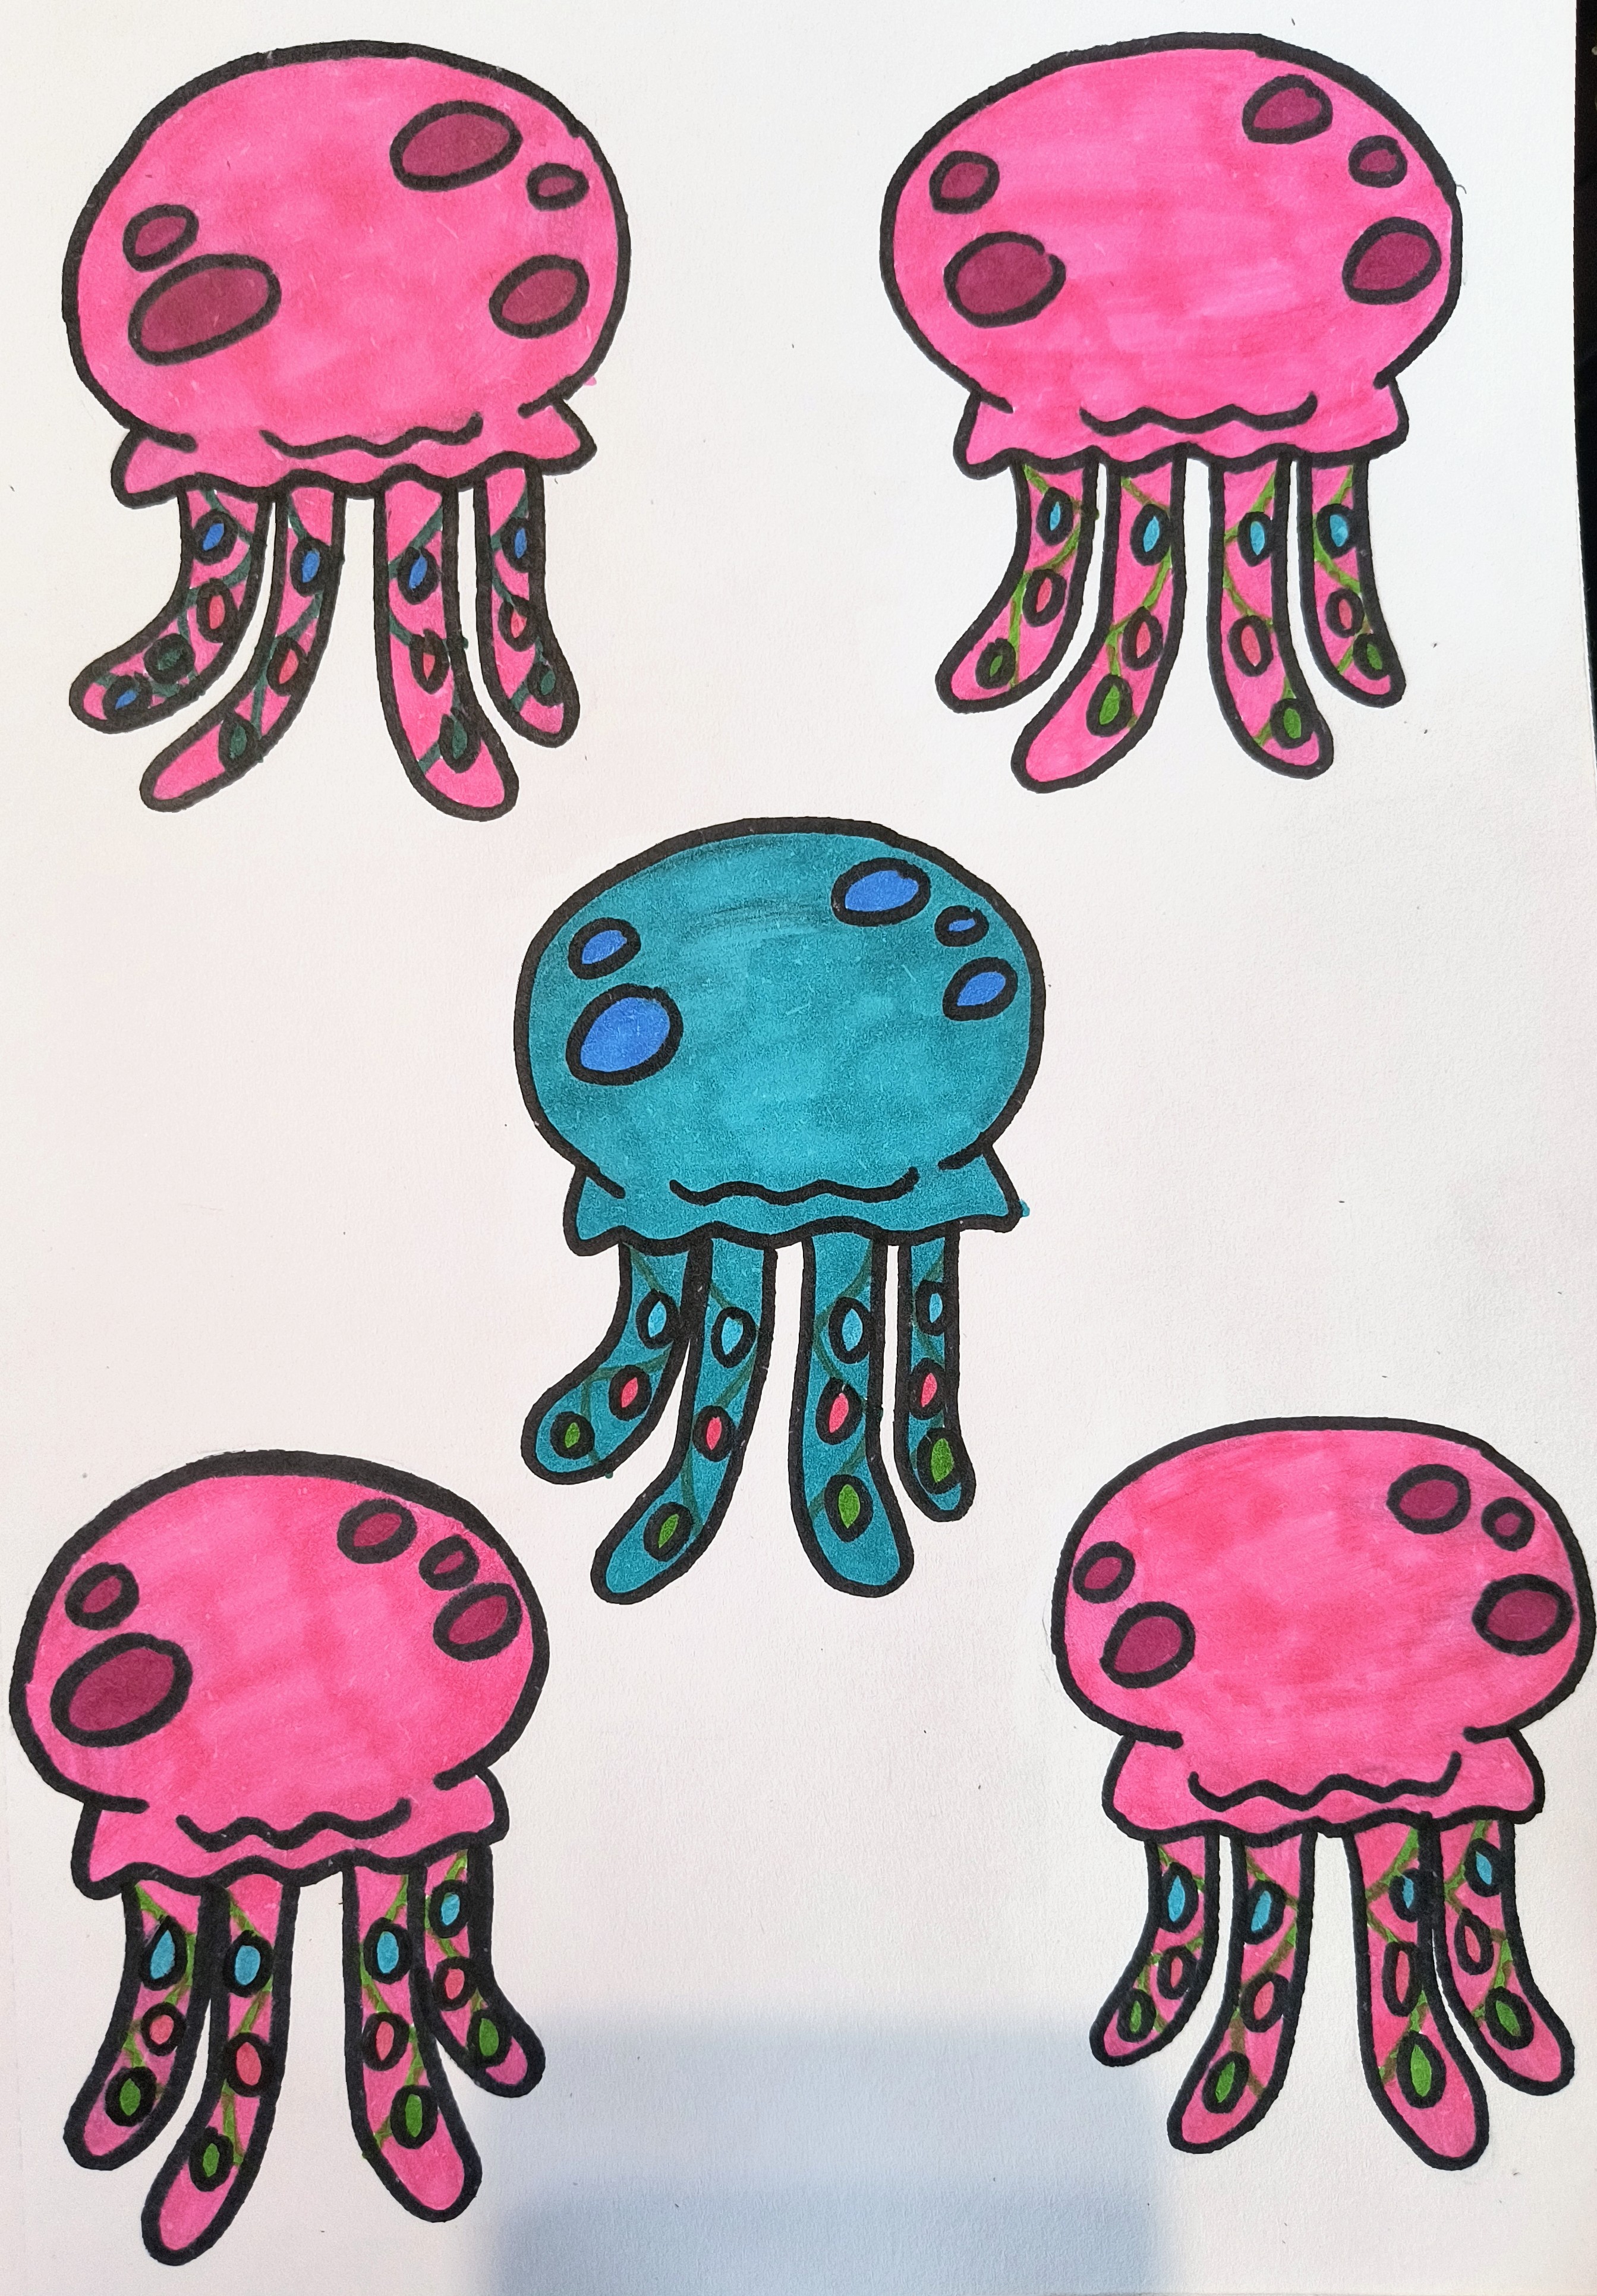 SpongeBob SquarePants Christmas: Jellyfish by YamakaiYoko on